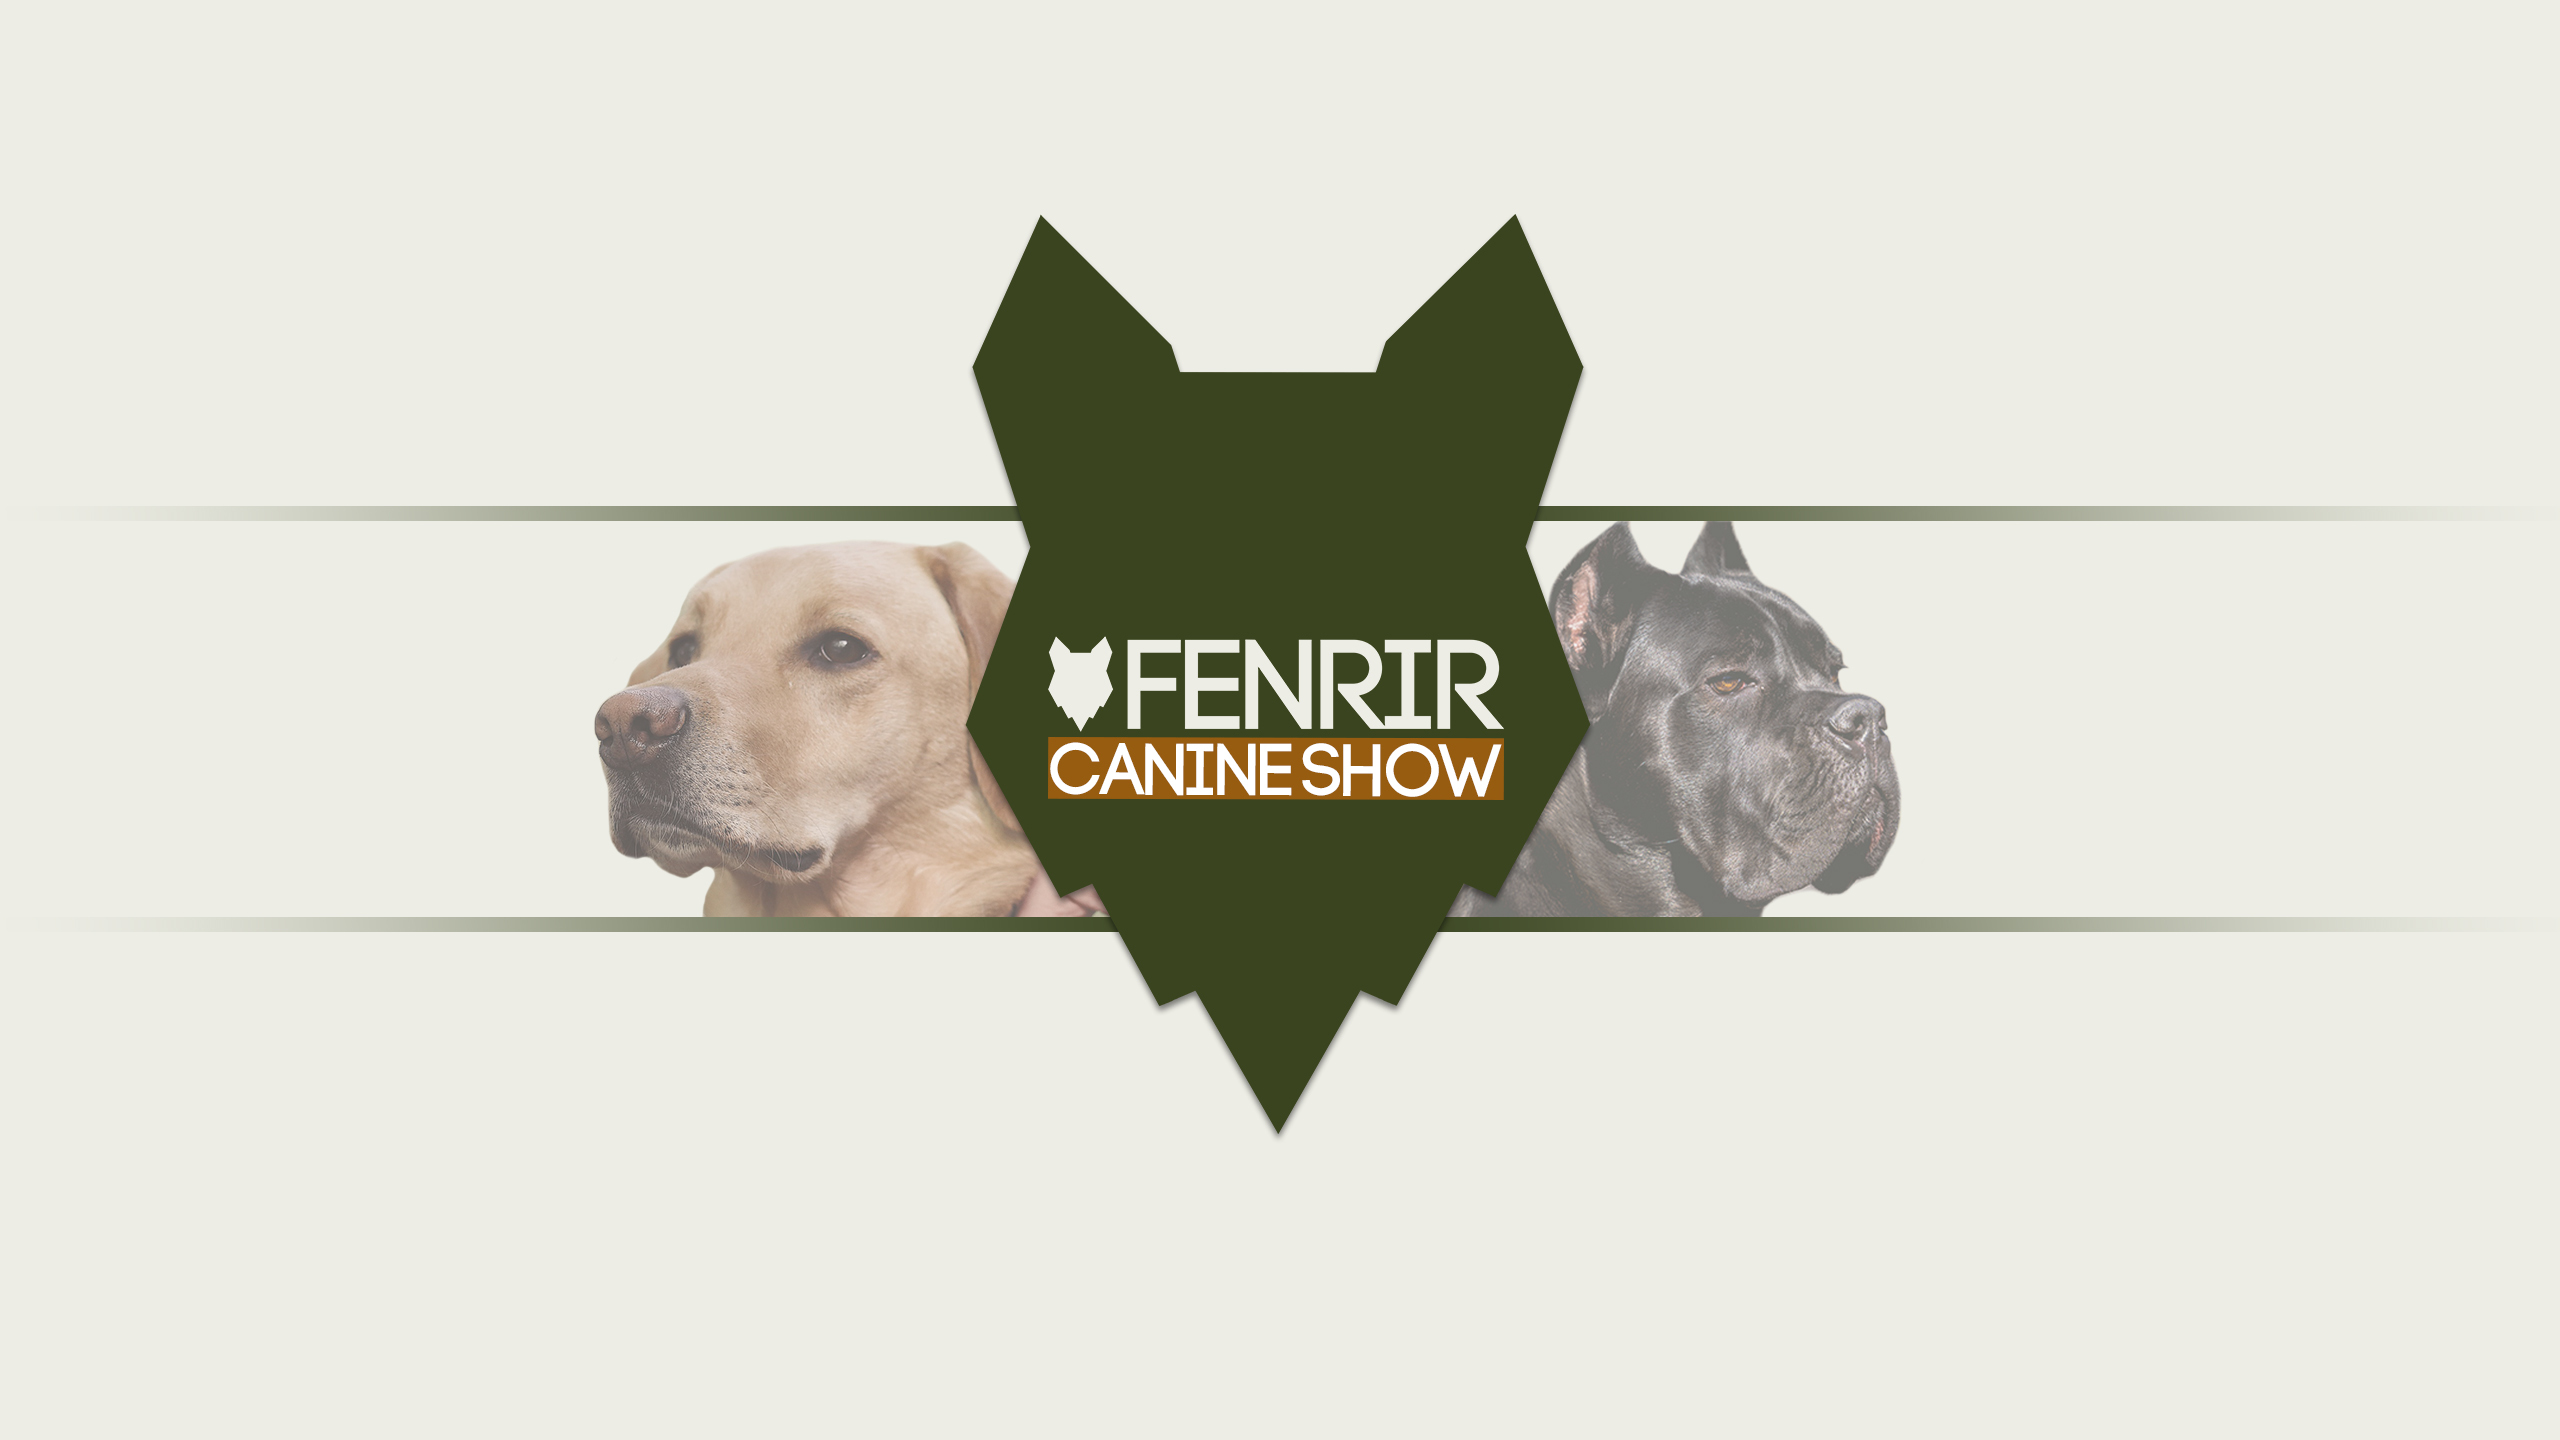 Fenrir Canine Show